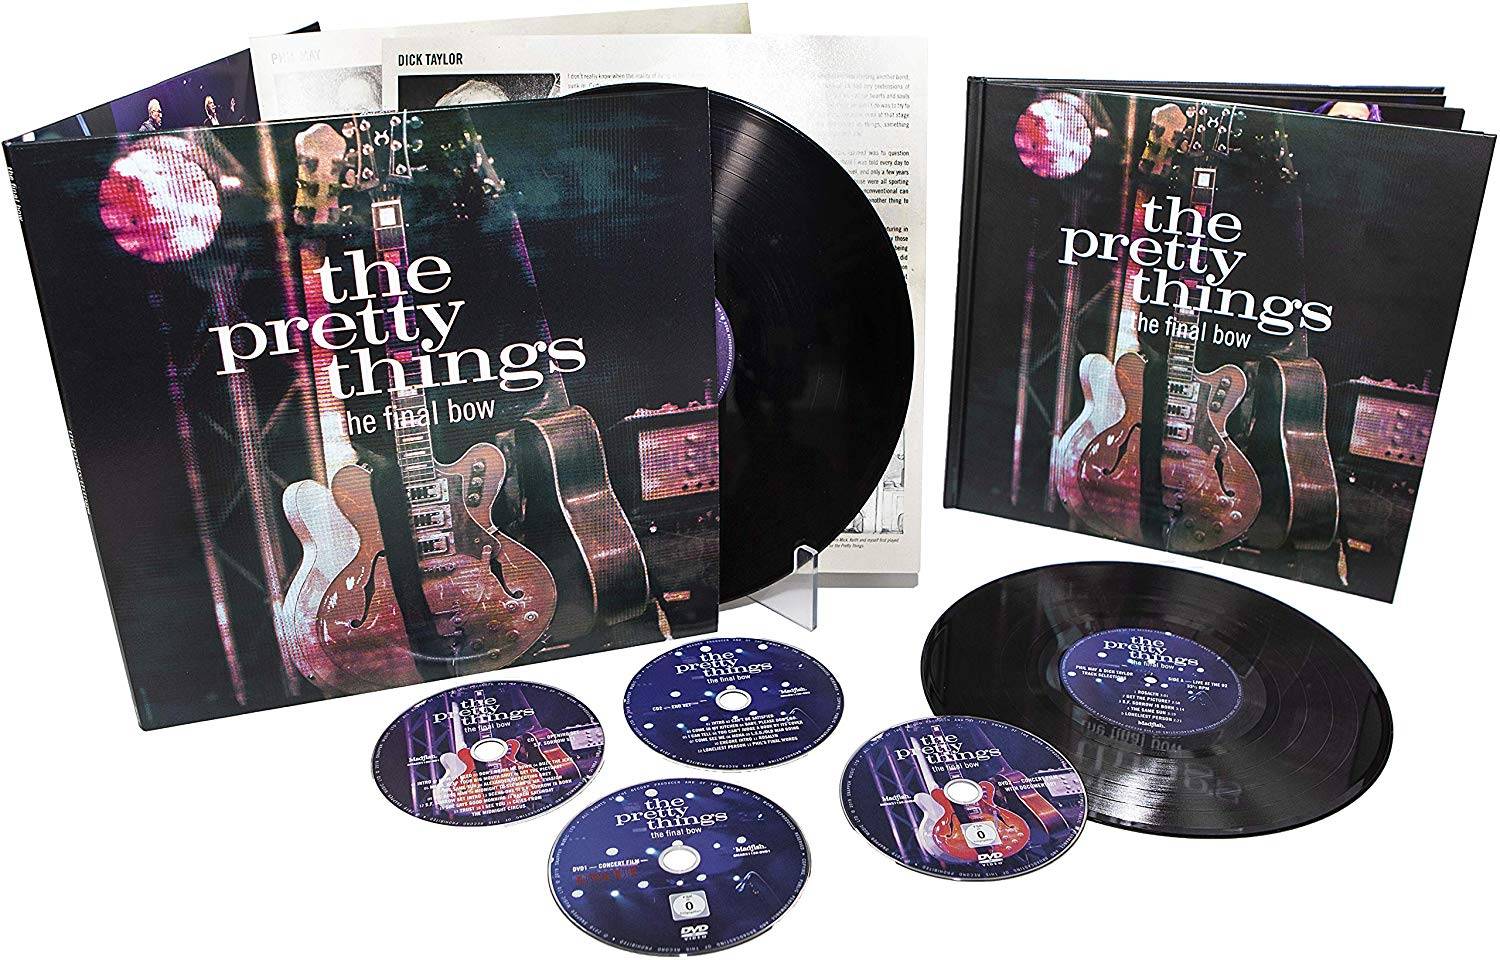 Vinyl News #6: Octopus, The Doors, Aretha...